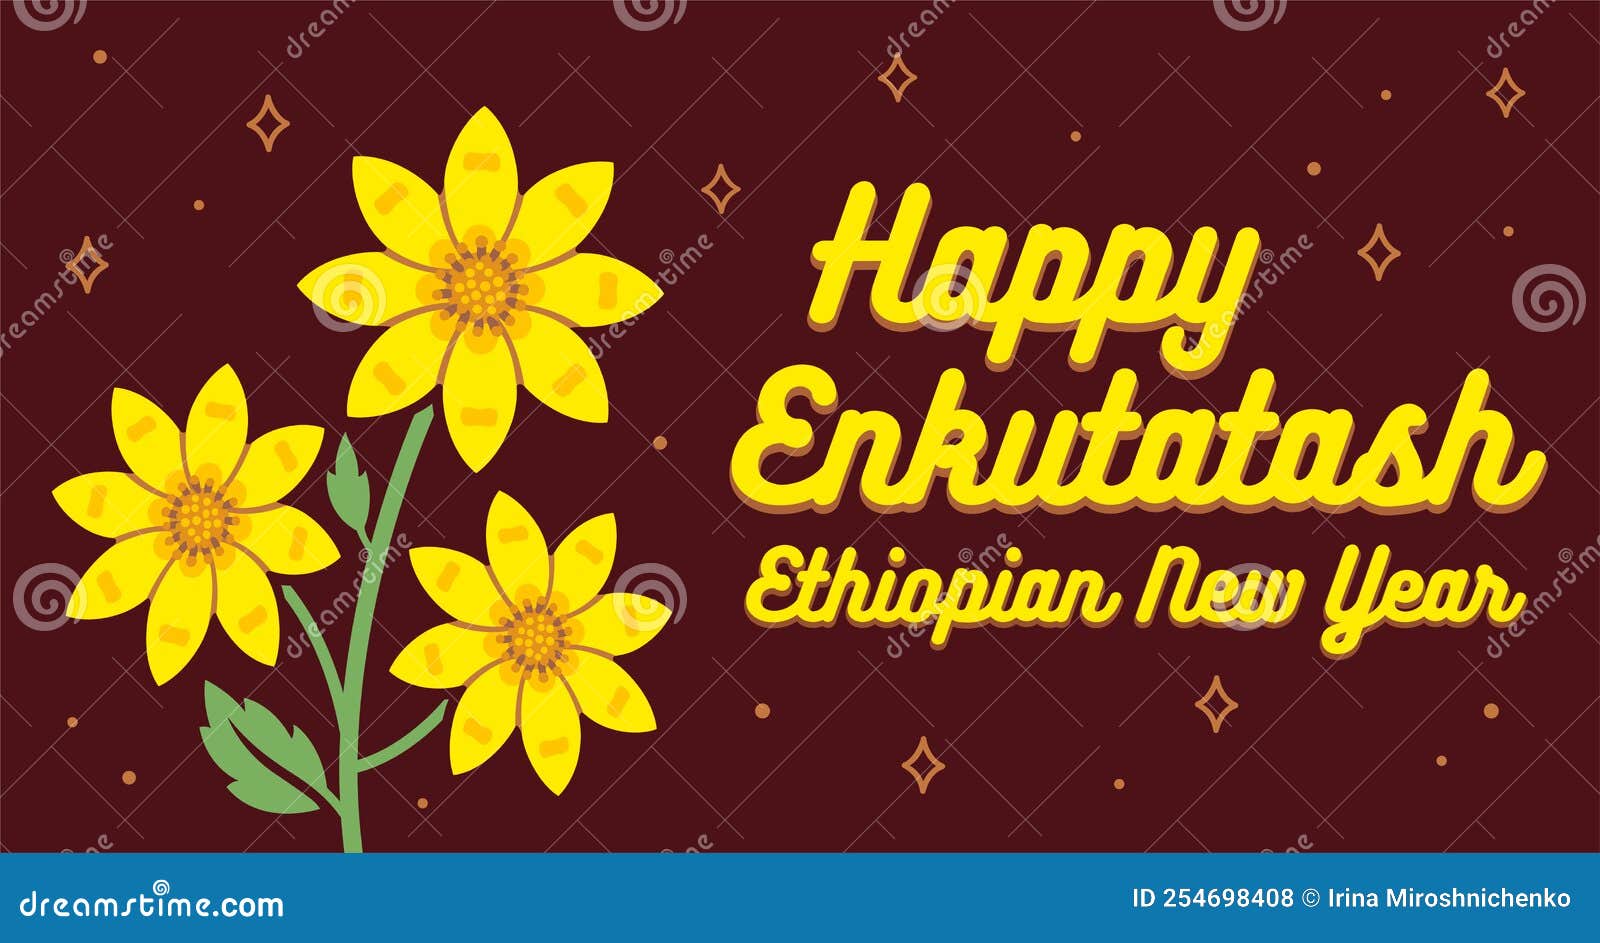 Happy Enkutatash Ethiopian New Year Stock Vector Illustration of